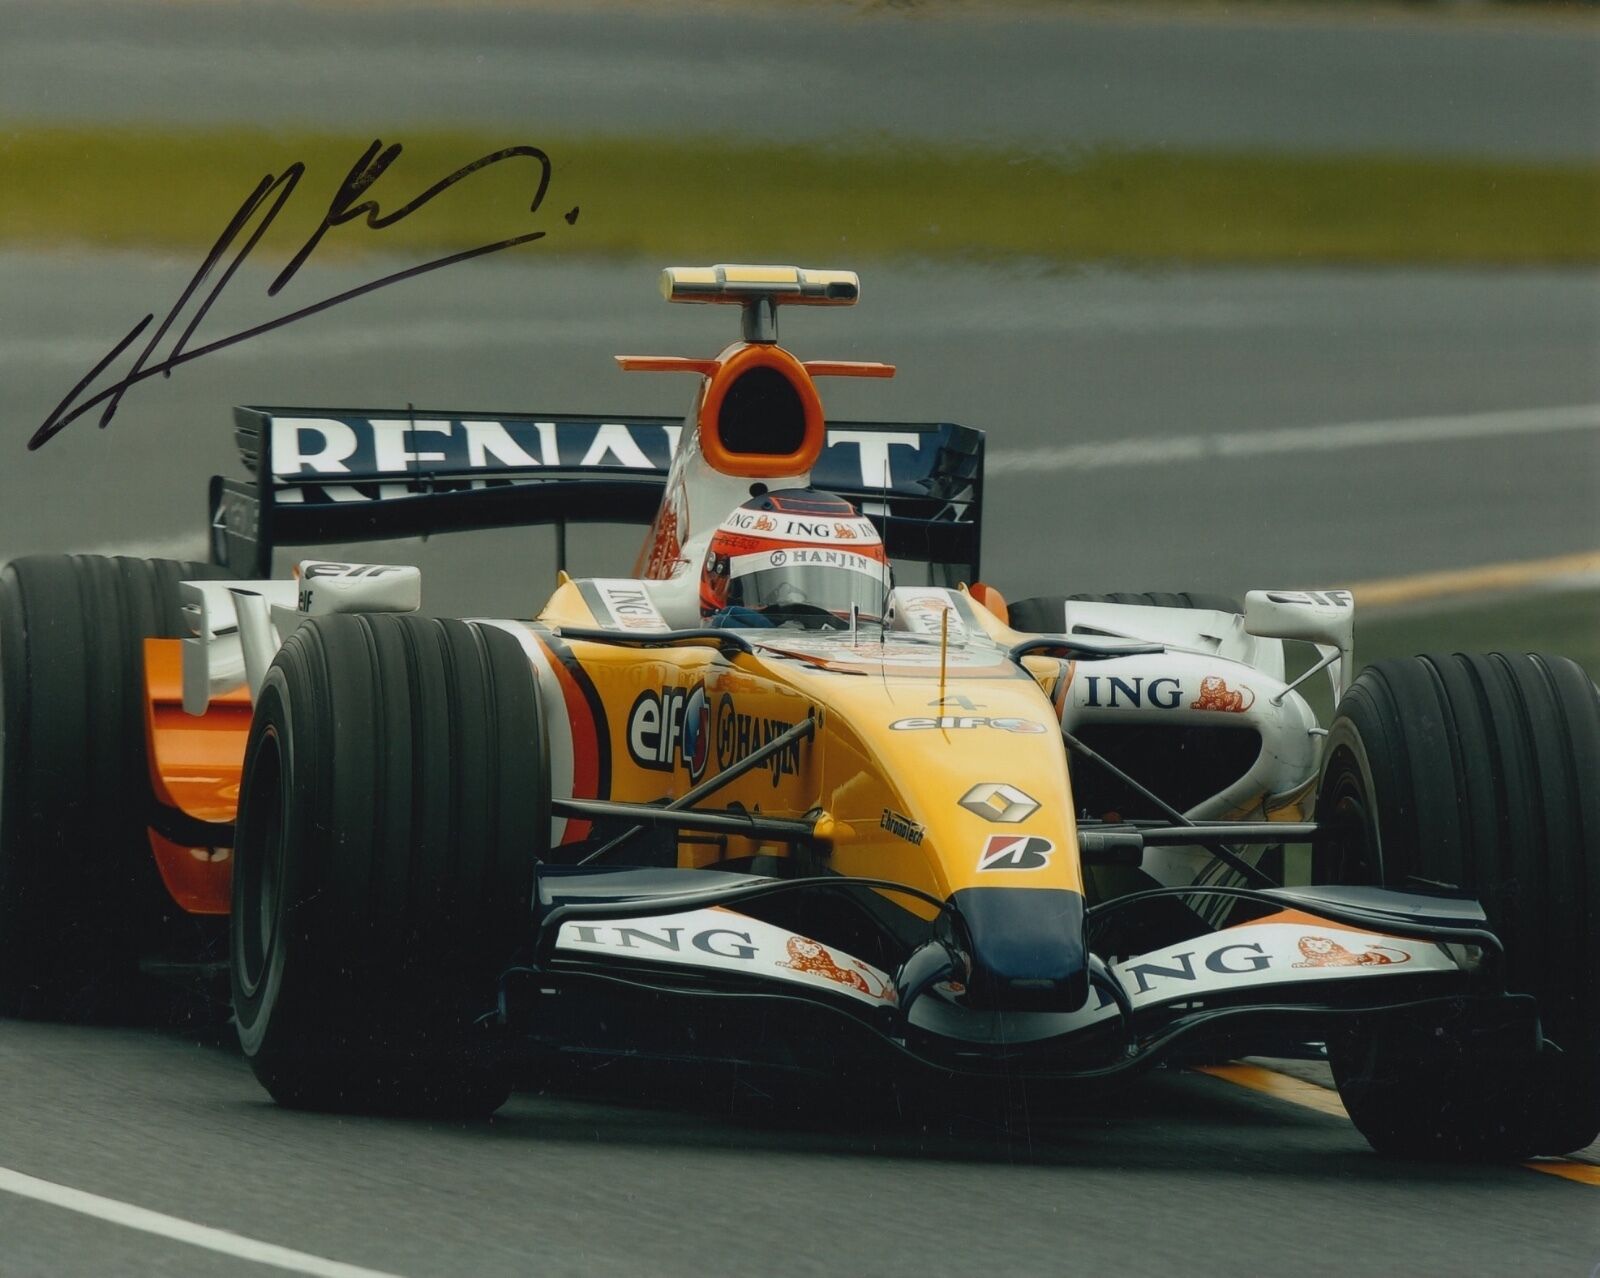 Heikki Kovalainen Hand Signed ING Renault 10x8 Photo Poster painting F1.